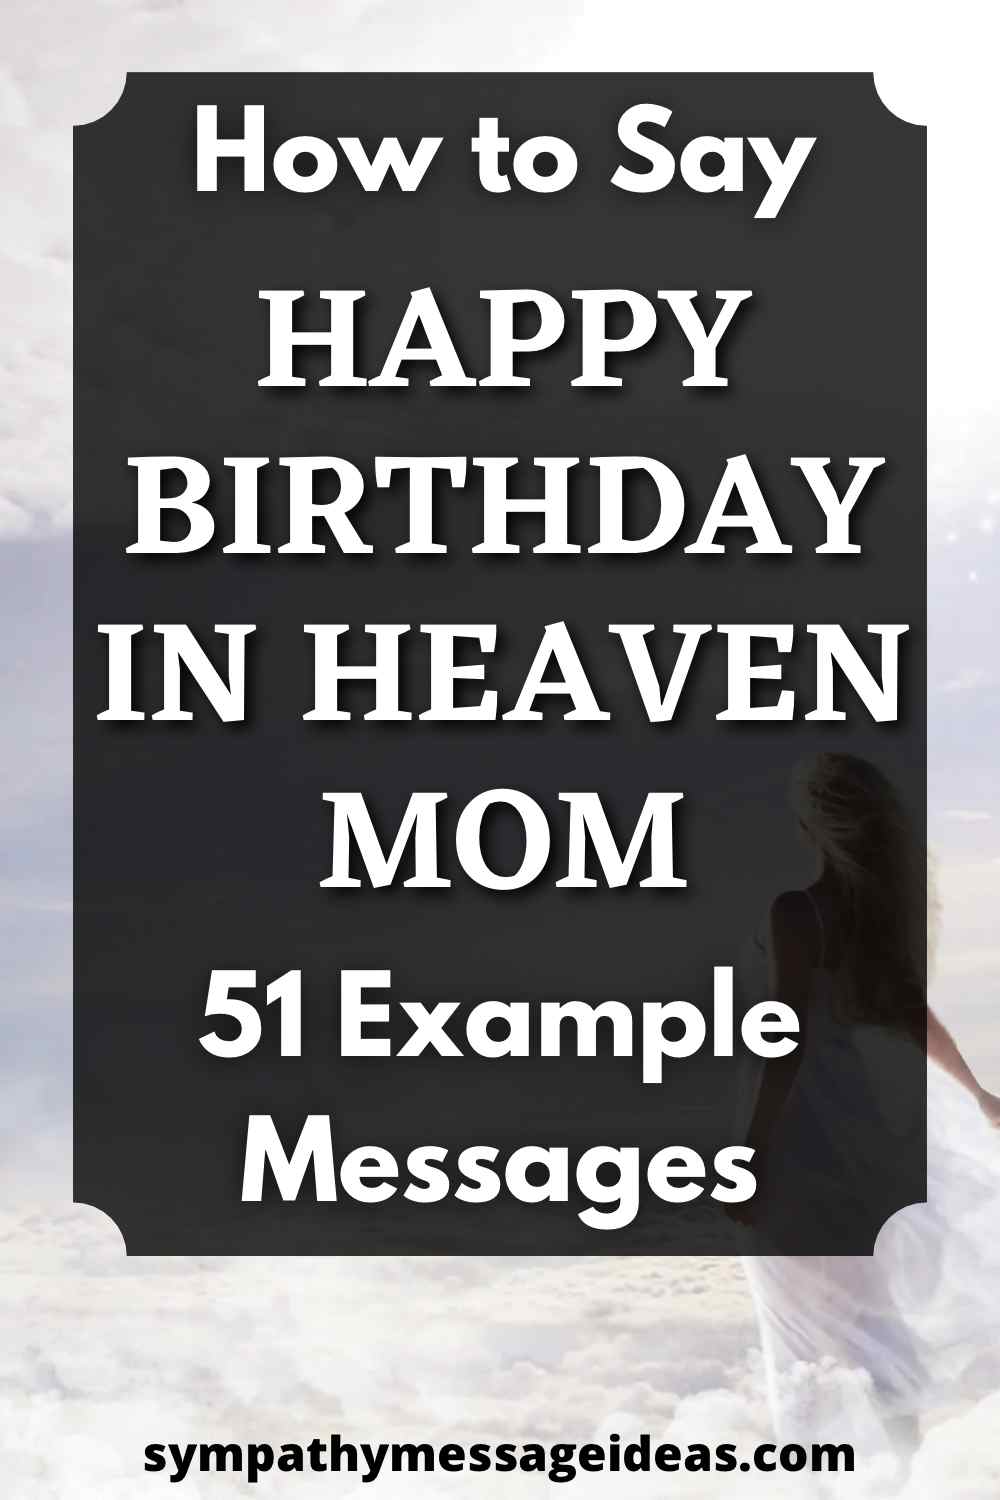 Happy Birthday Mom in Heaven Archives - Sympathy Message Ideas